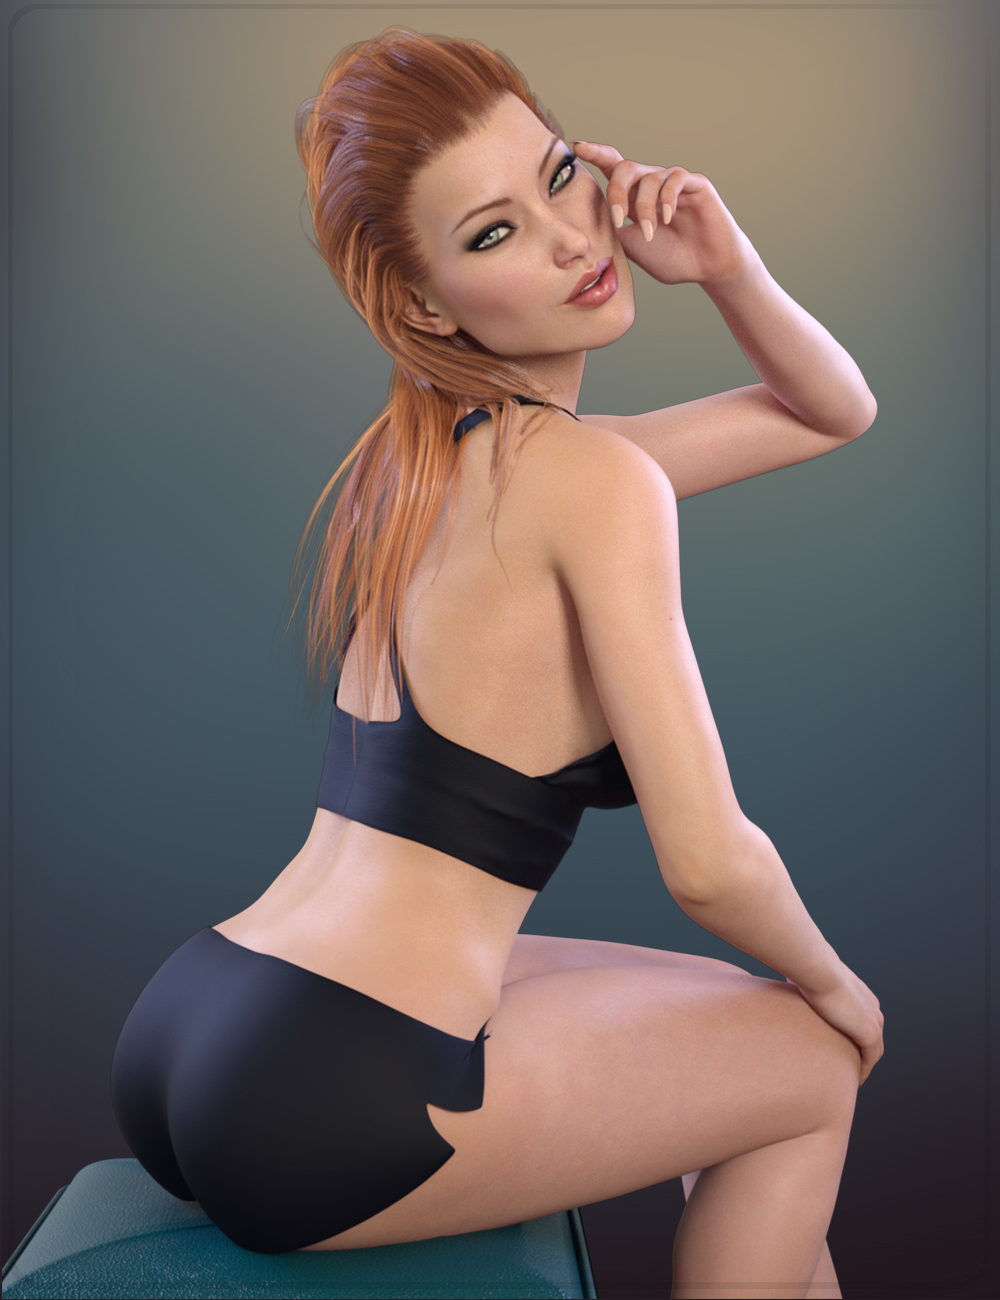 Z Sitting - Poses for Genesis 3 Female by: Zeddicuss, 3D Models by Daz 3D